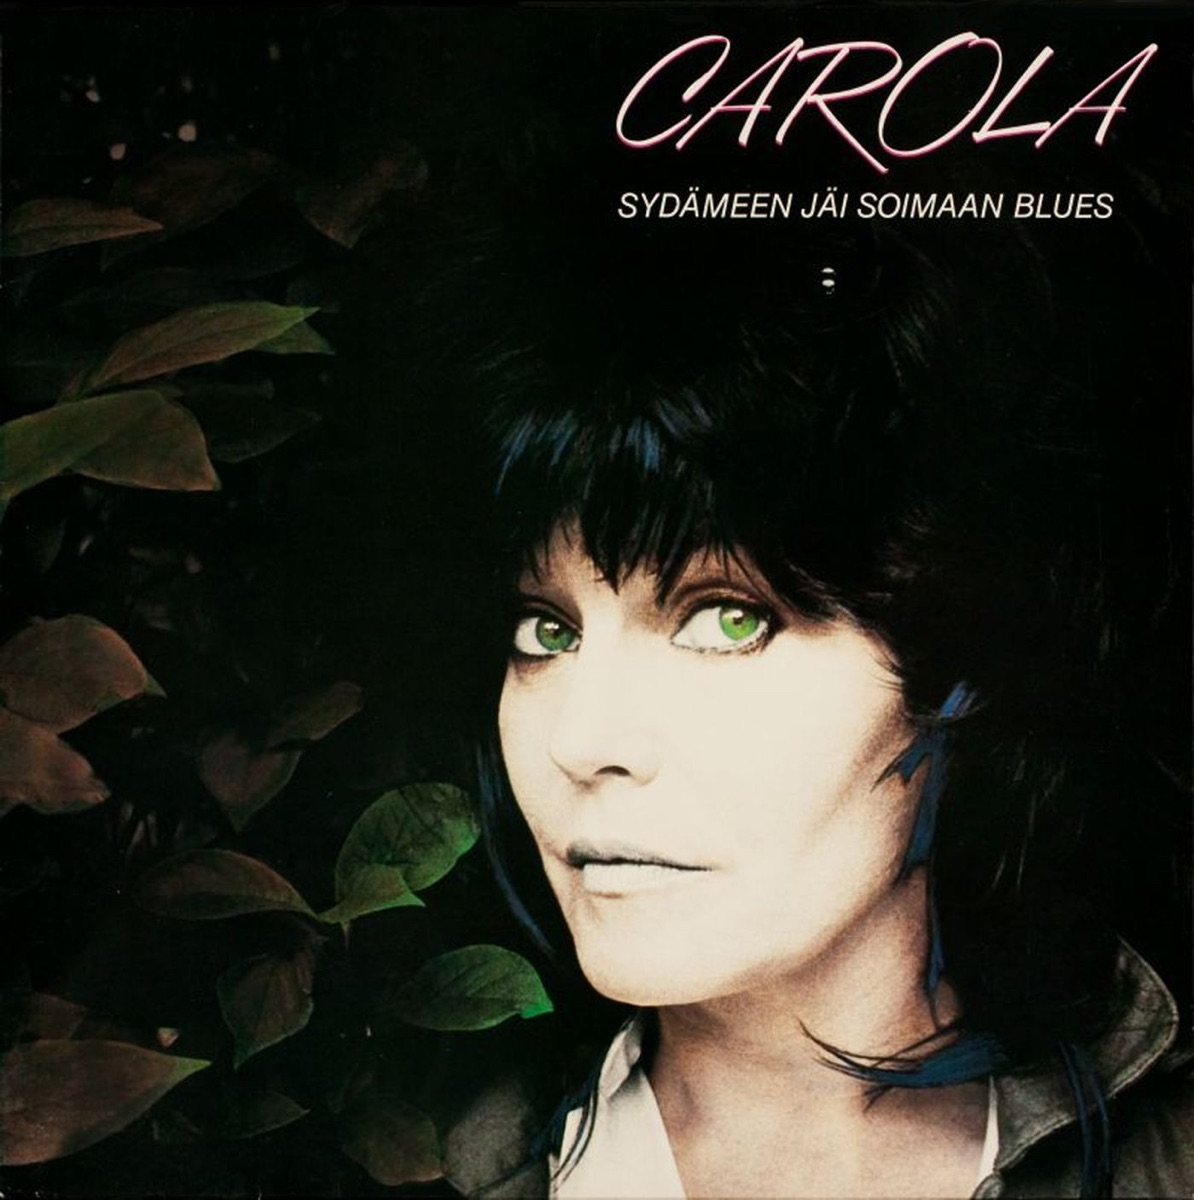 Carola by Carola Standertskjöld on Apple Music